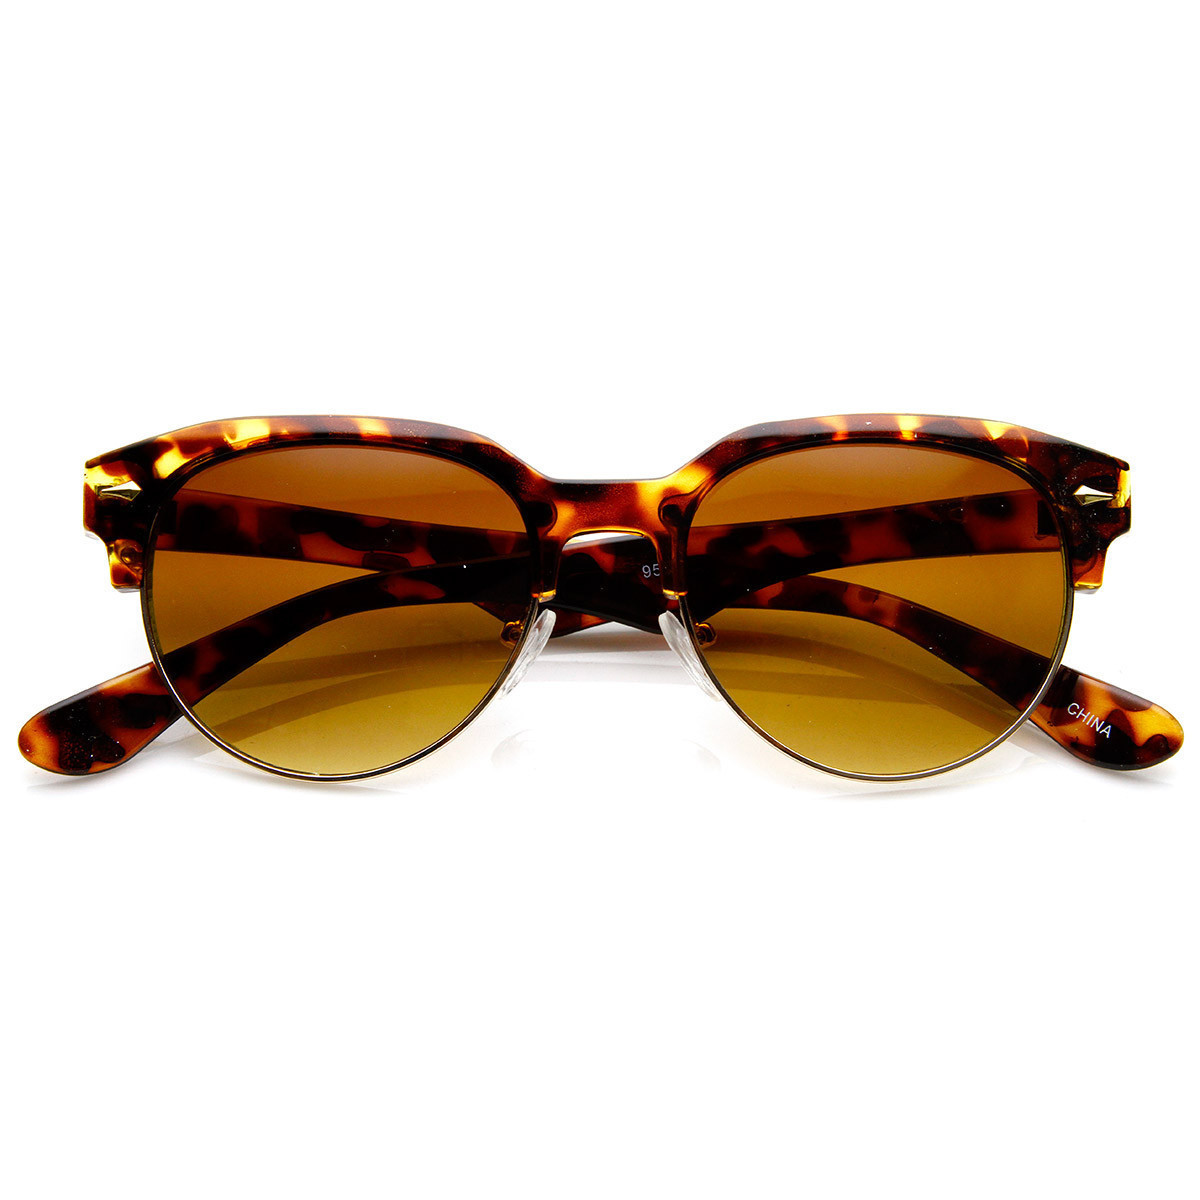 Classic Semi-Rimless Half Frame Retro Horned Rim Sunglasses - 8819 - Black Green